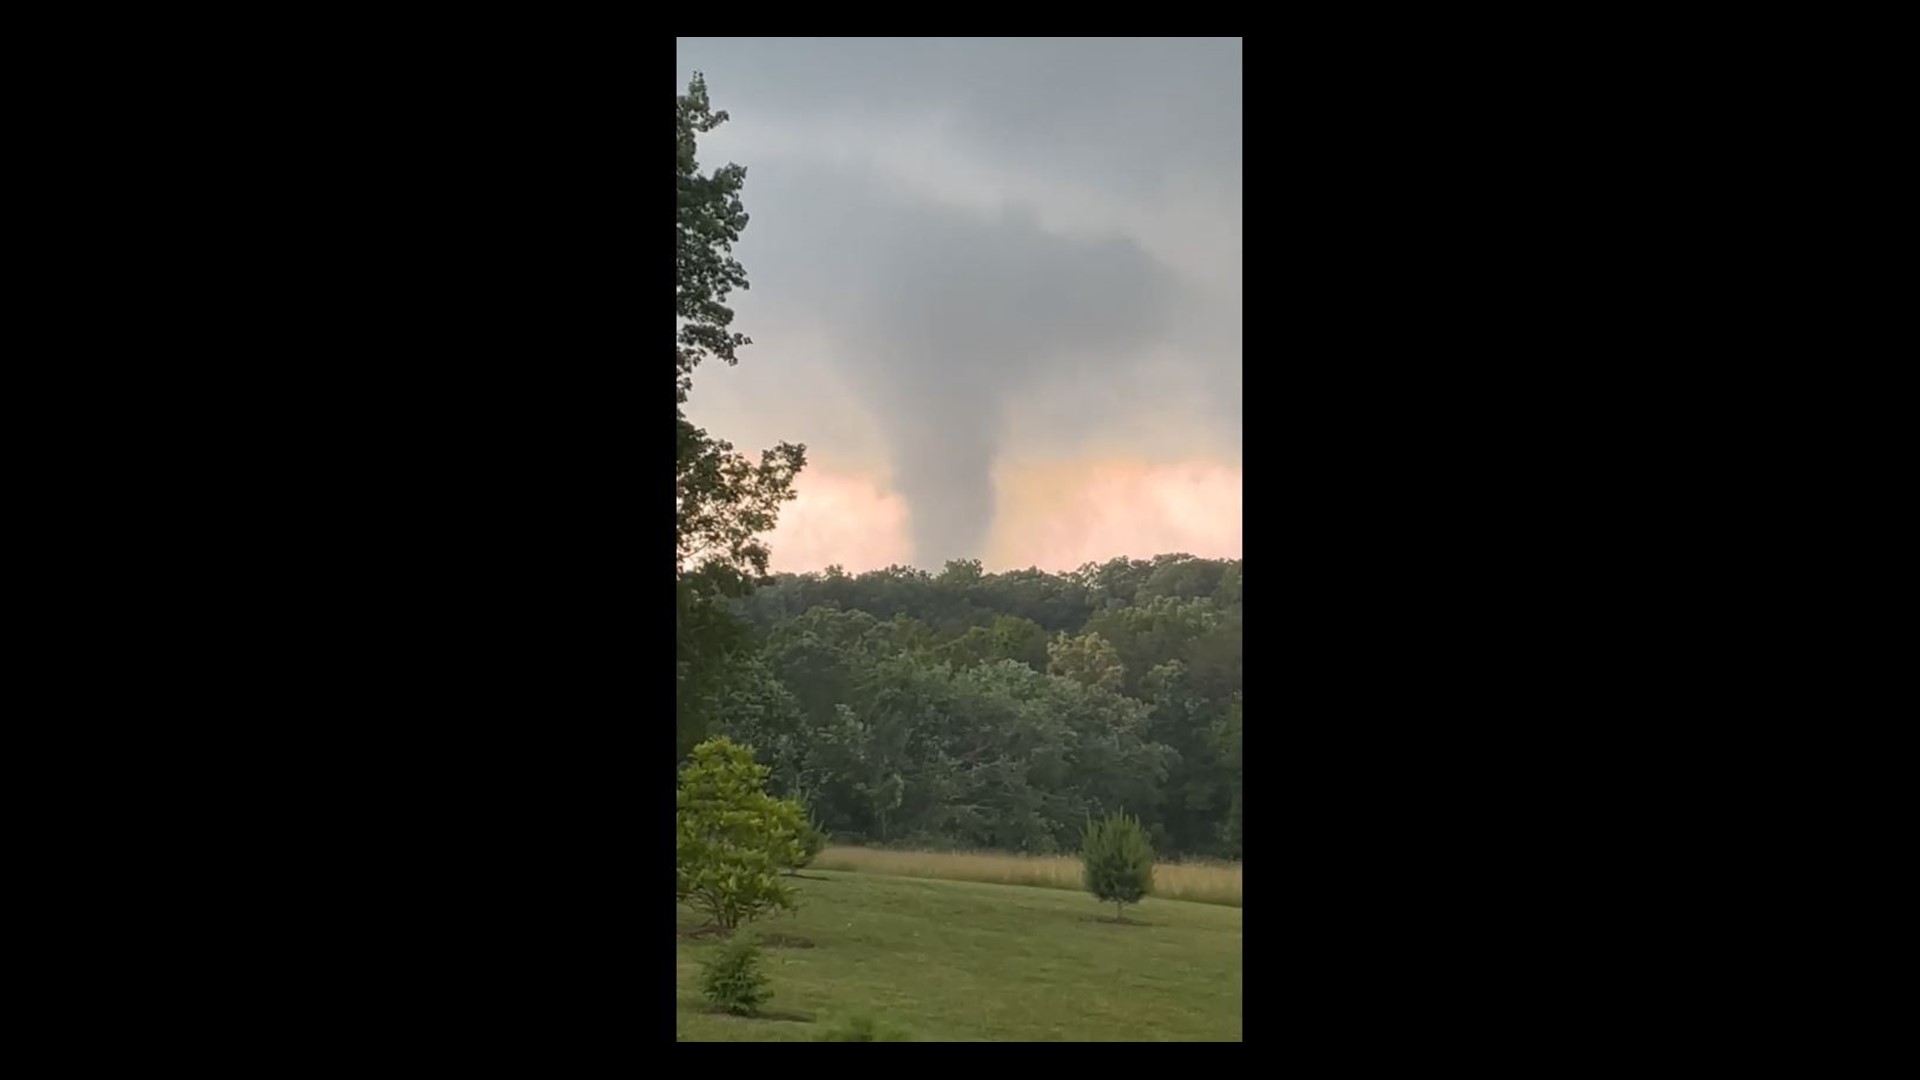 Tornado touching down in Allardt, Tennessee.